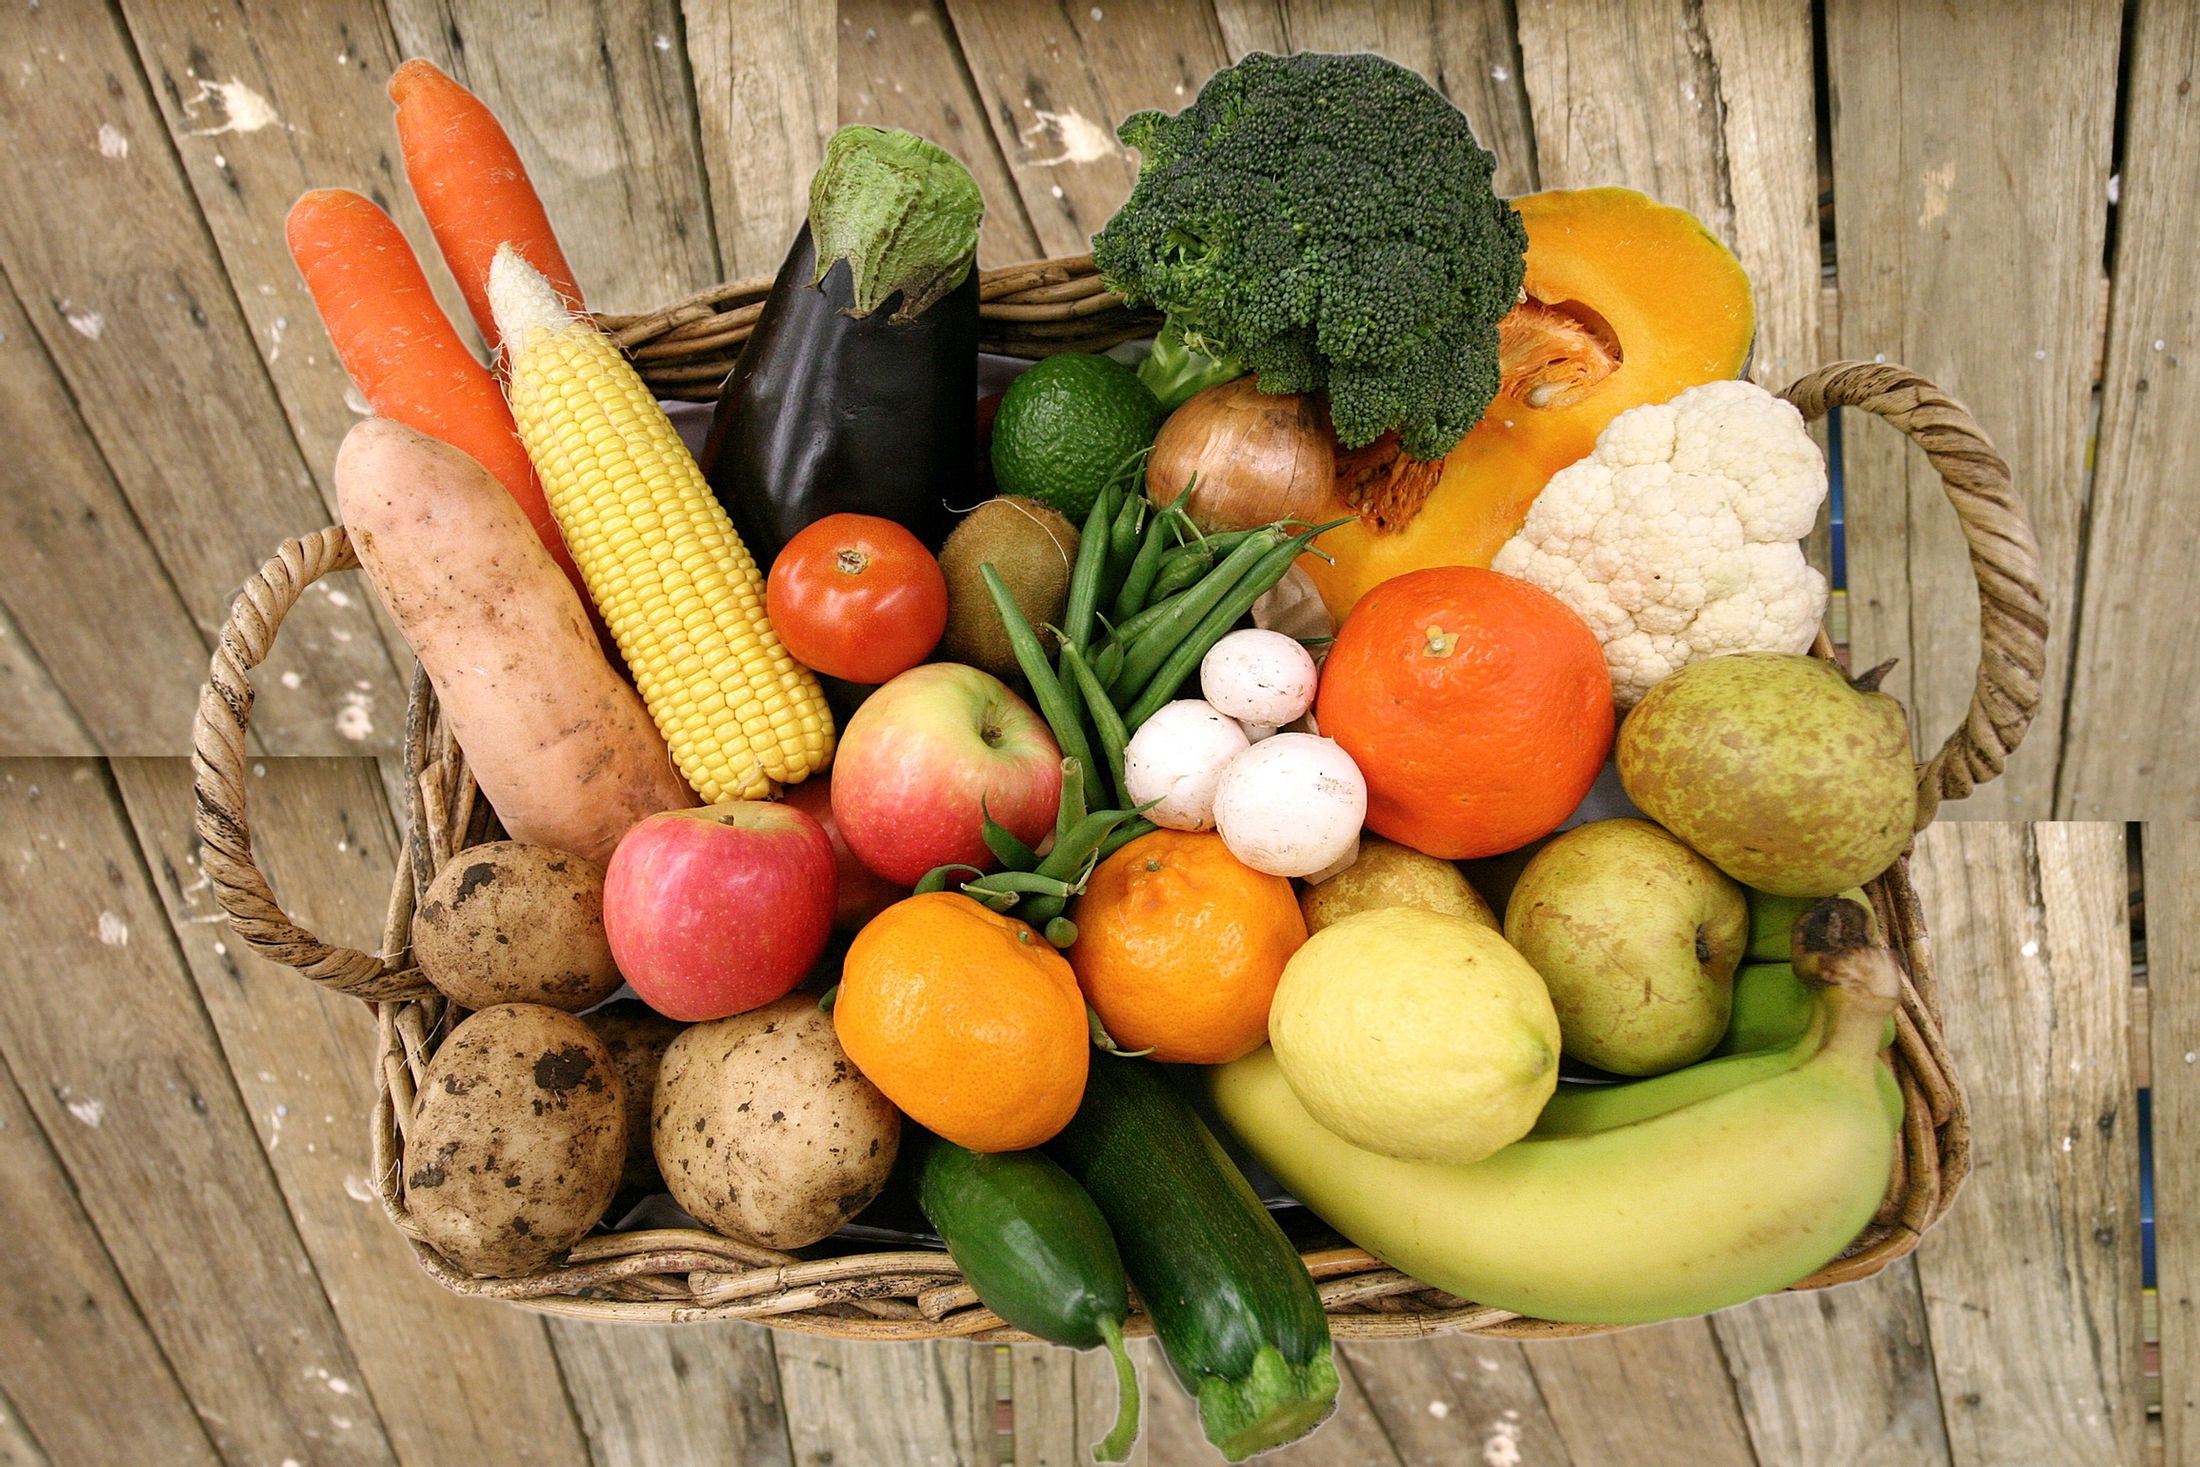 Vegetable products. Овощи и фрукты. Корзинка с овощами. Свежие овощи. Свежие овощи и фрукты.